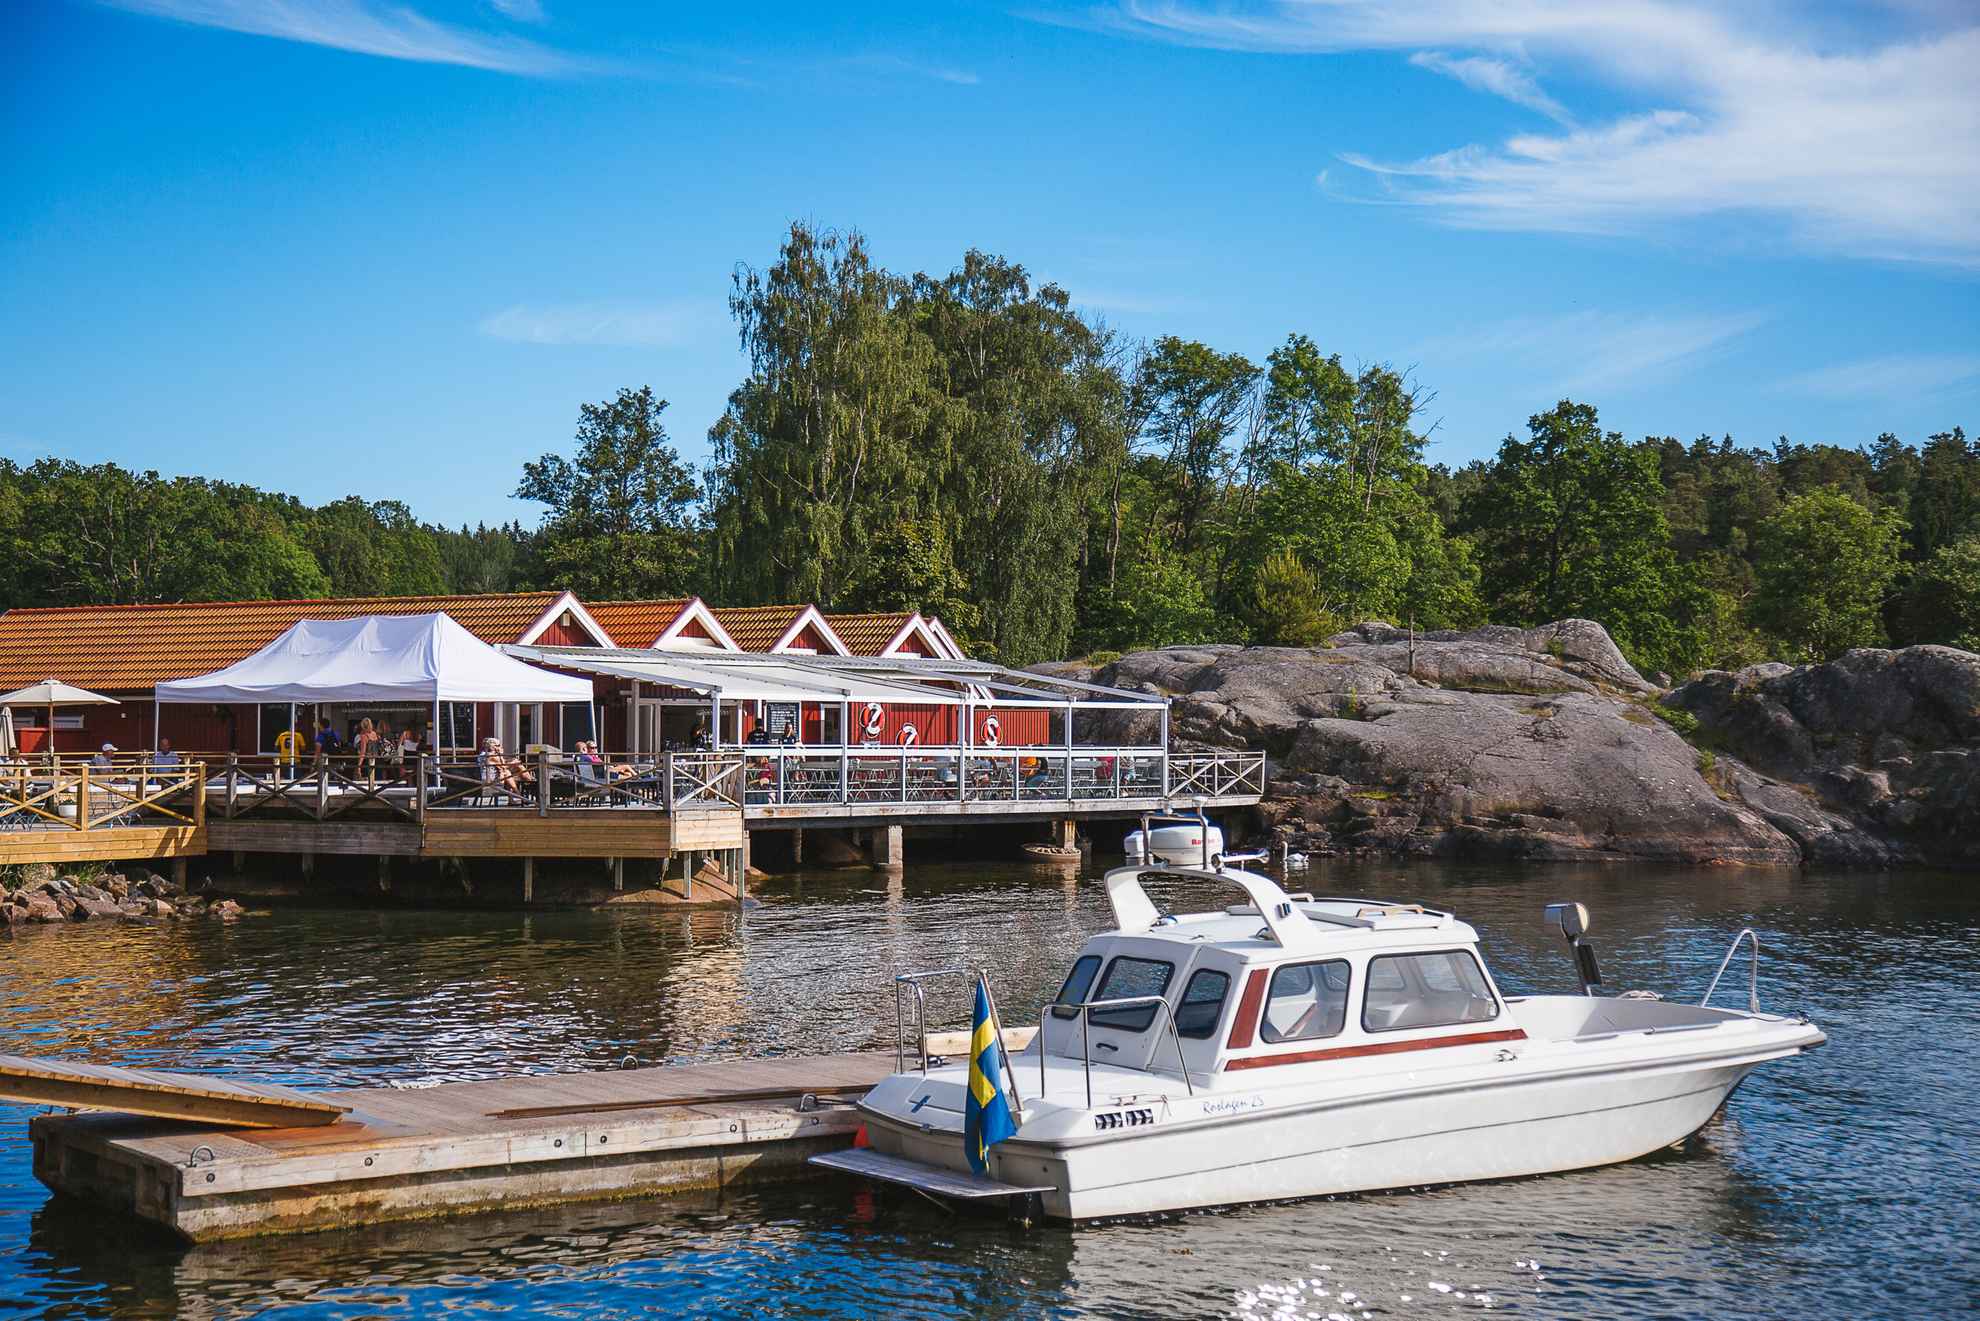 L'archipel de Stockholm